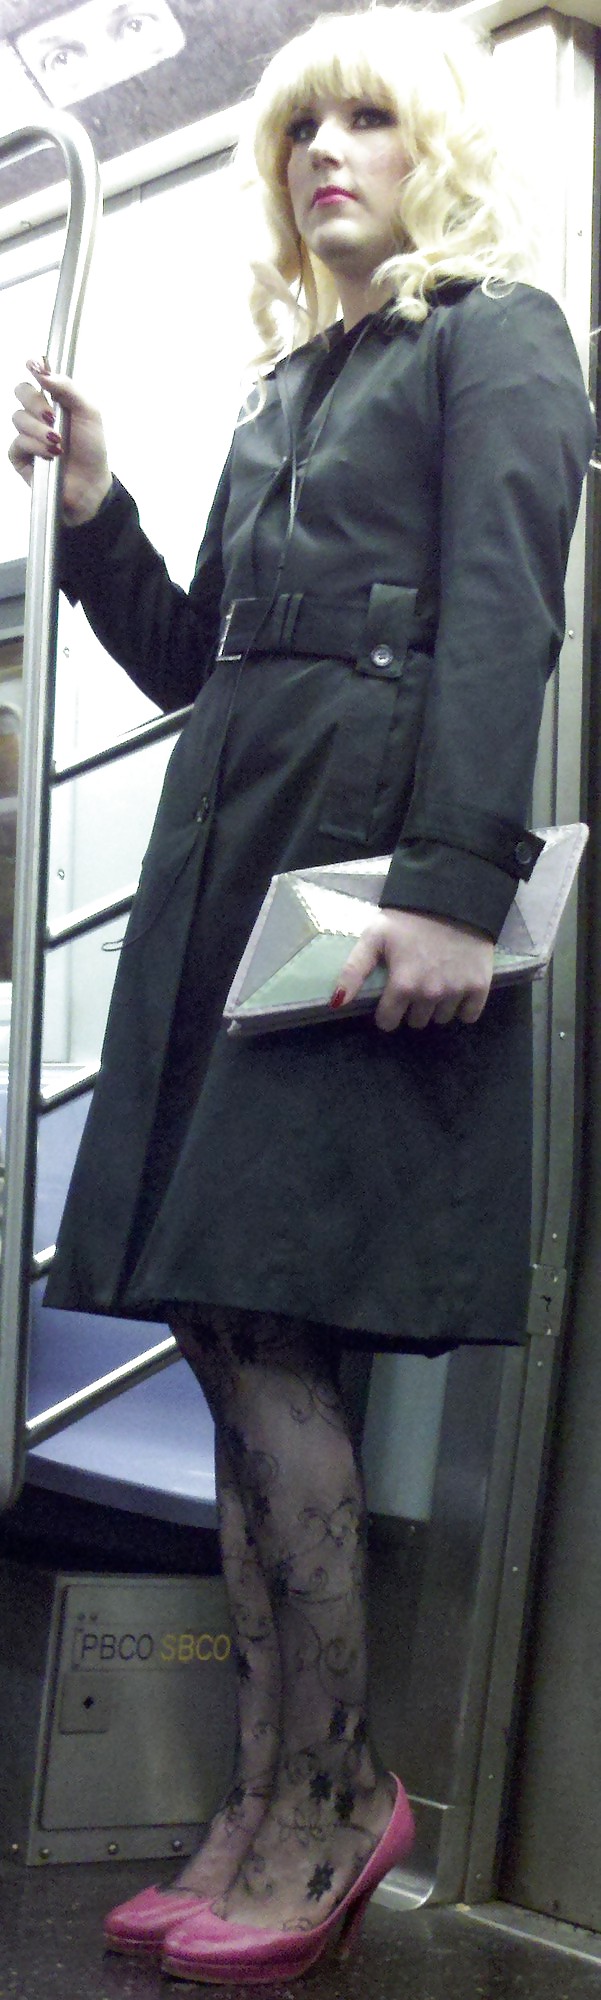 New York Subway Girls 107 Dude Looks Like a Lady #6603924